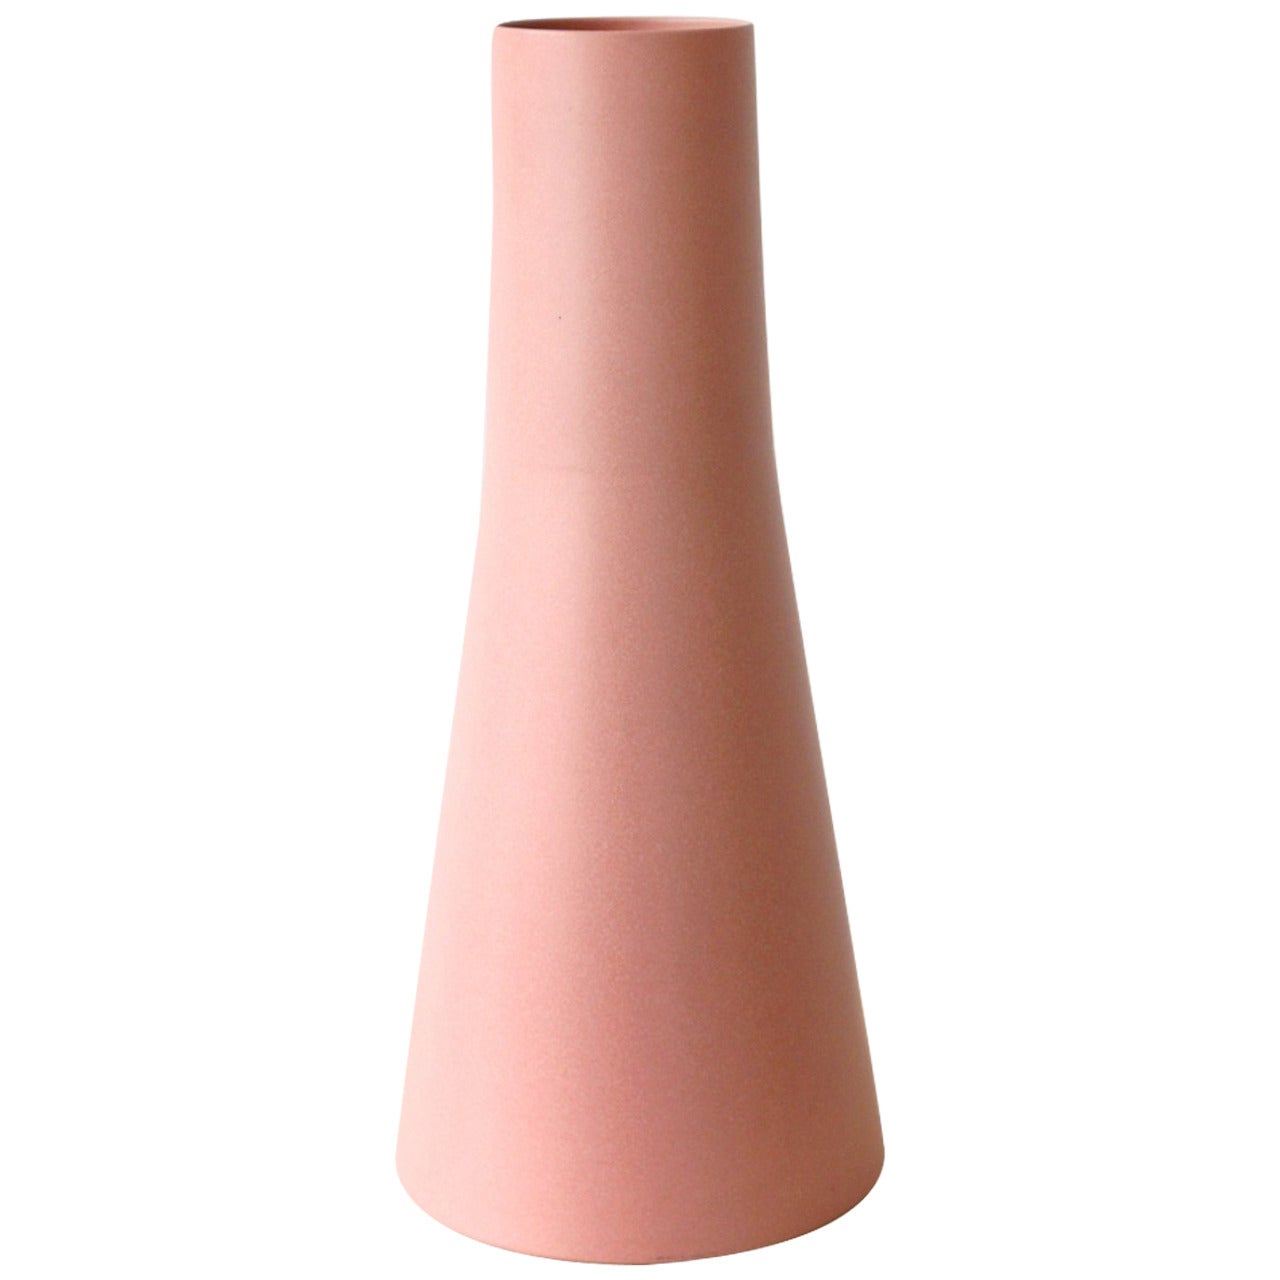 Vase, Pink Glaze, Unicum, Geert Lap For Sale